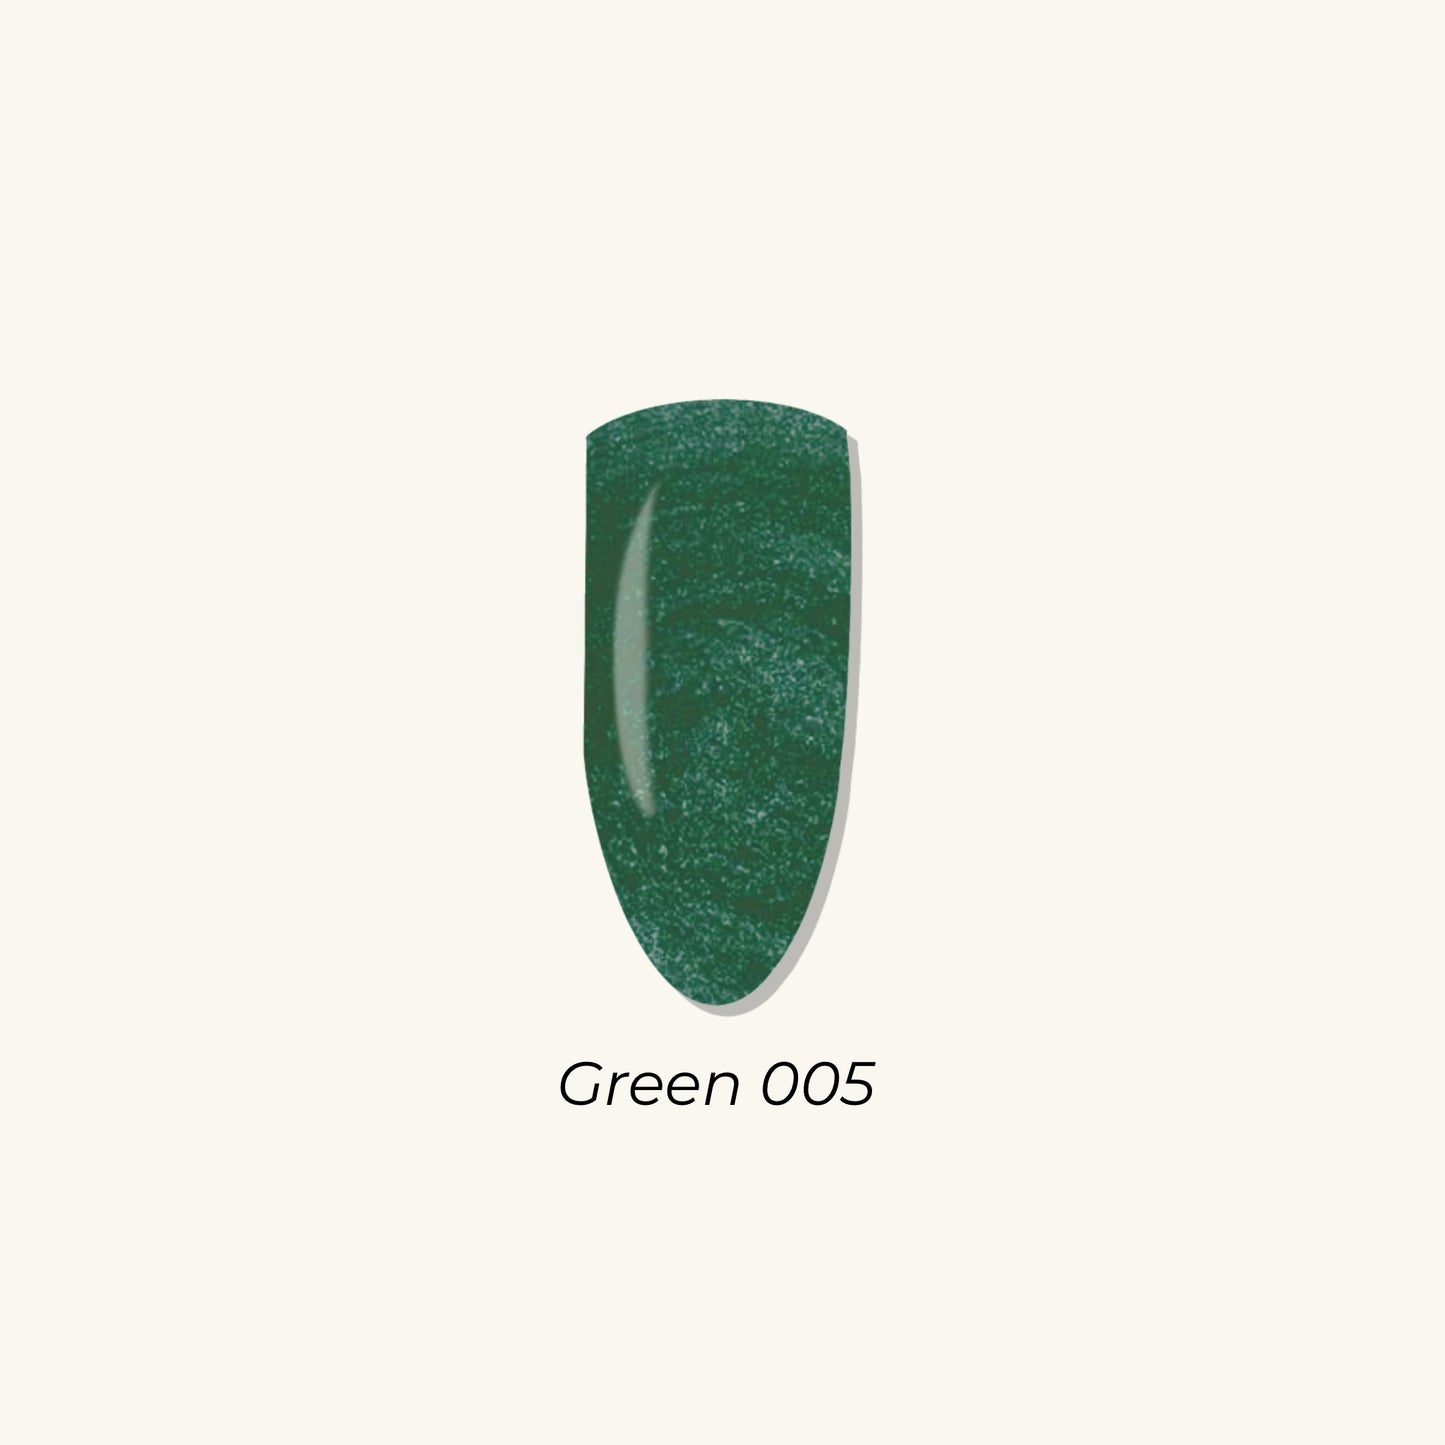 Green 005